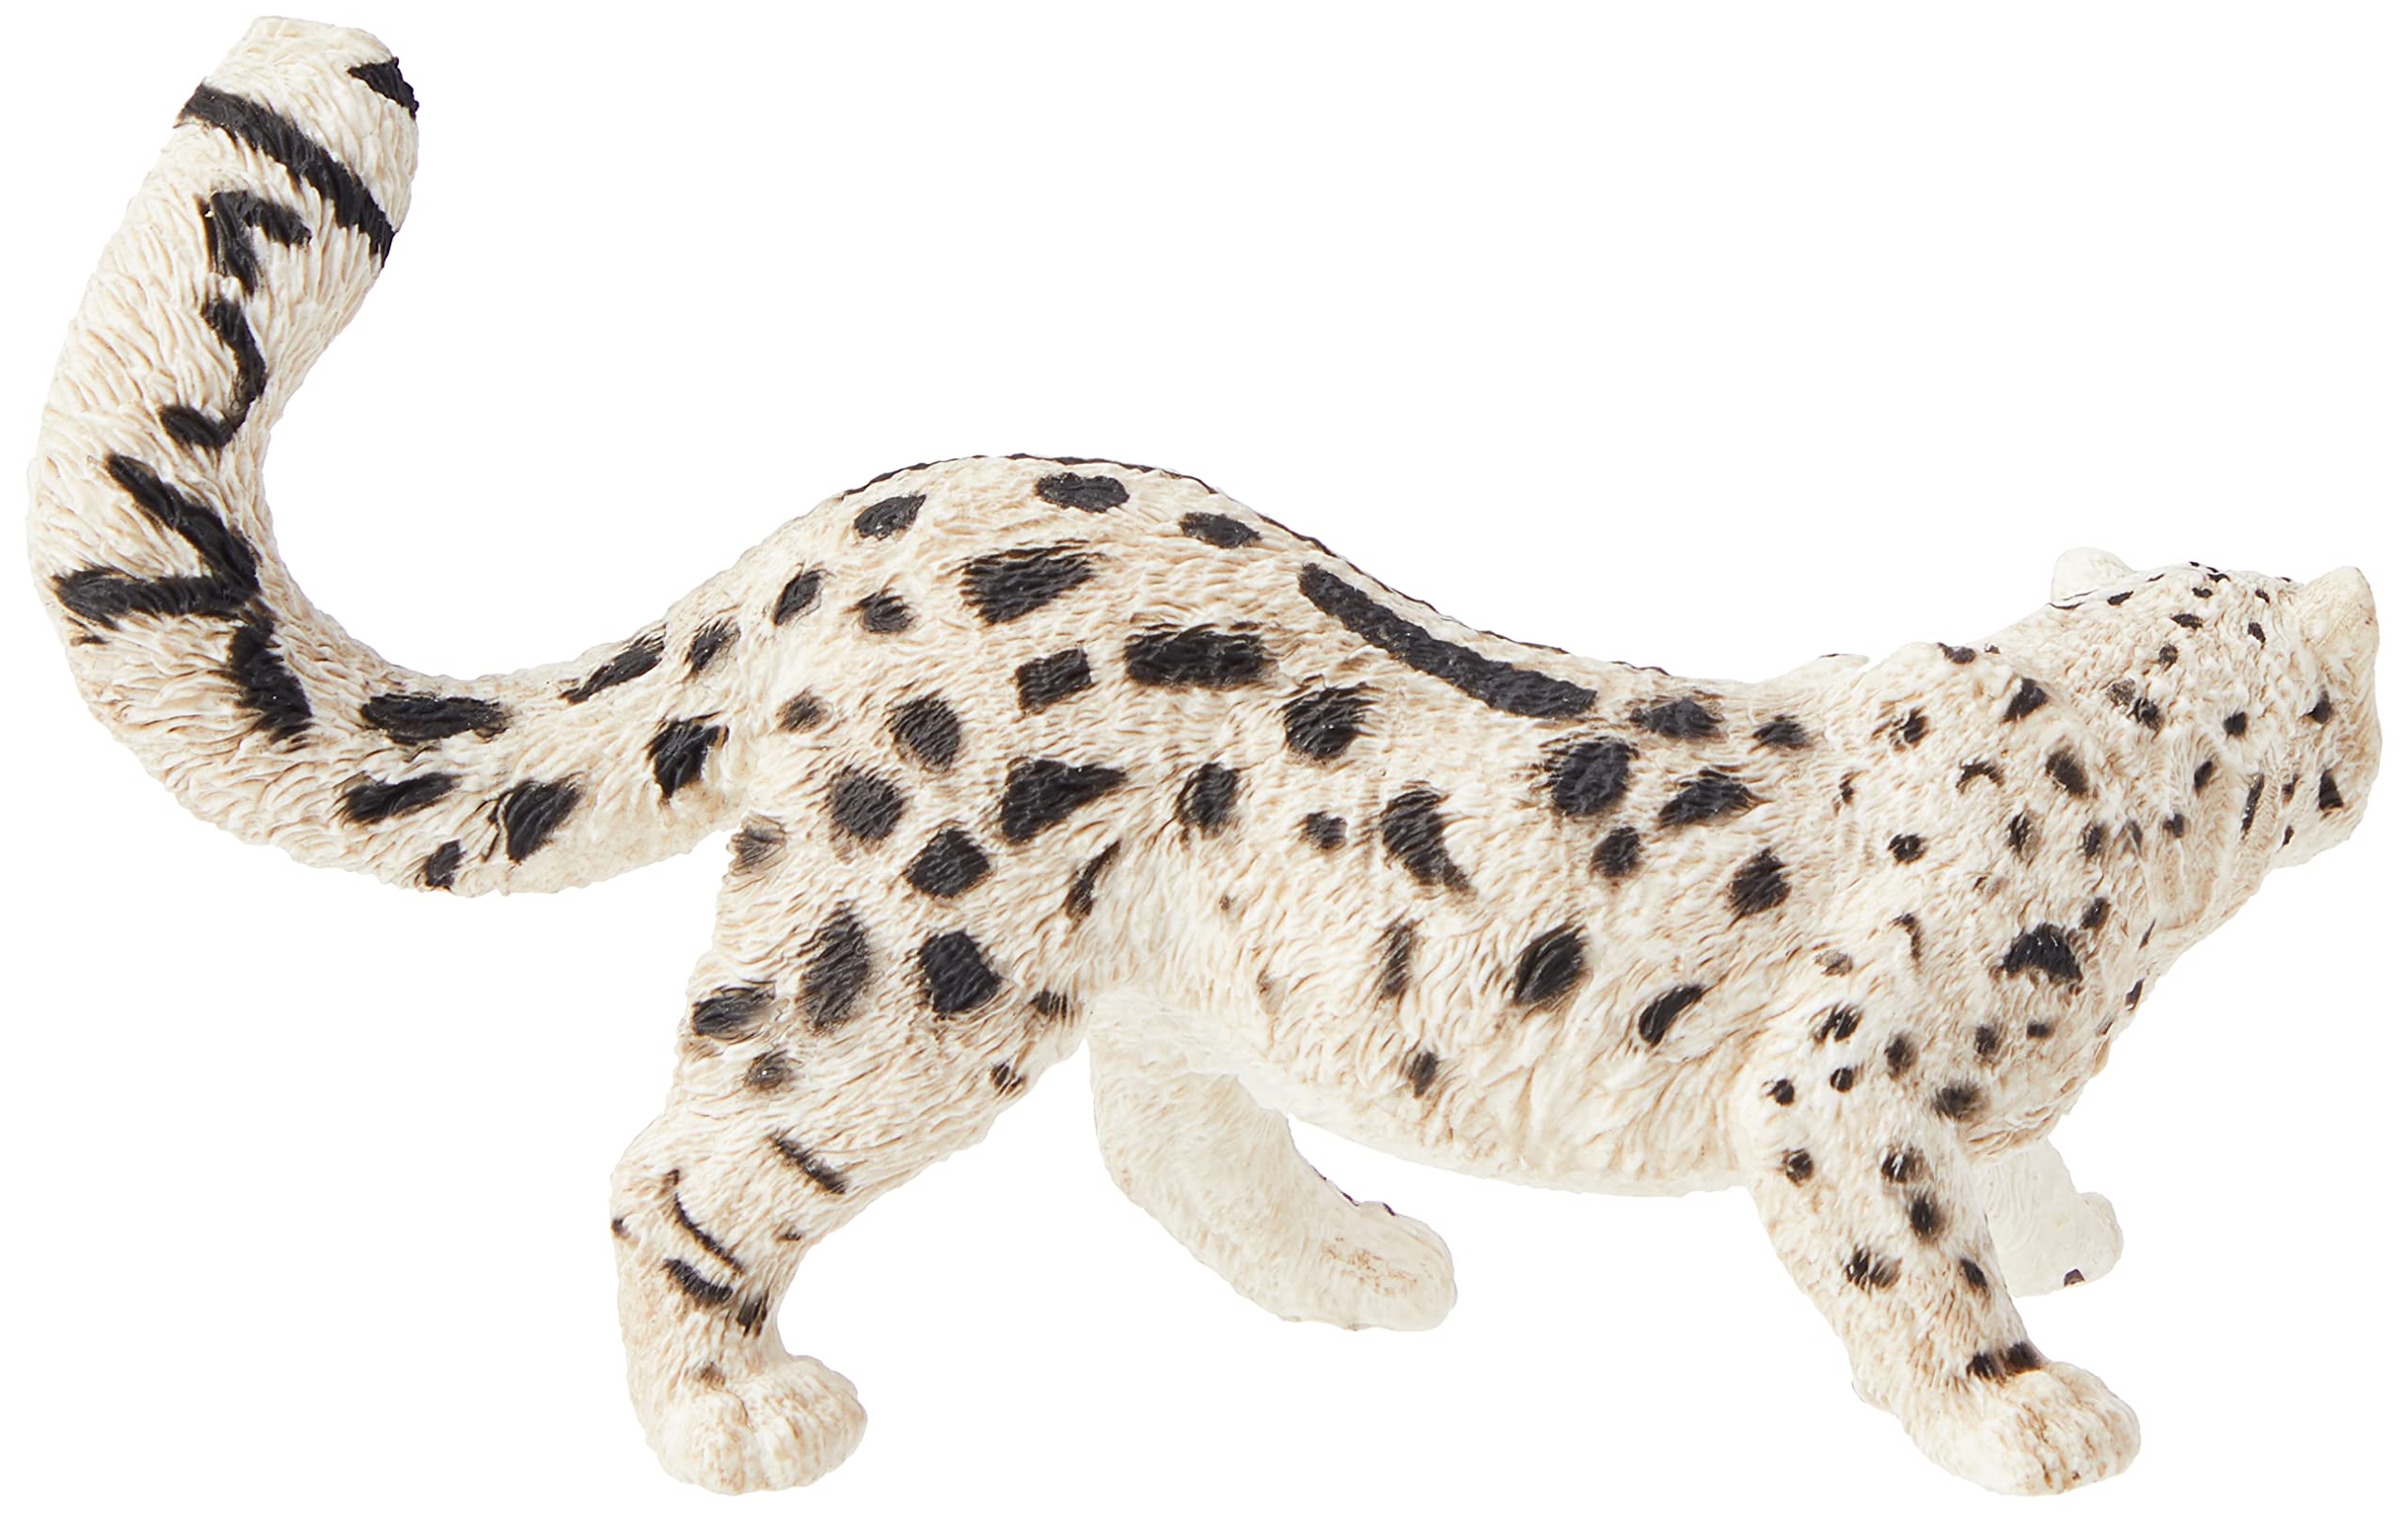 Papo Snow Leopard Toy Figure